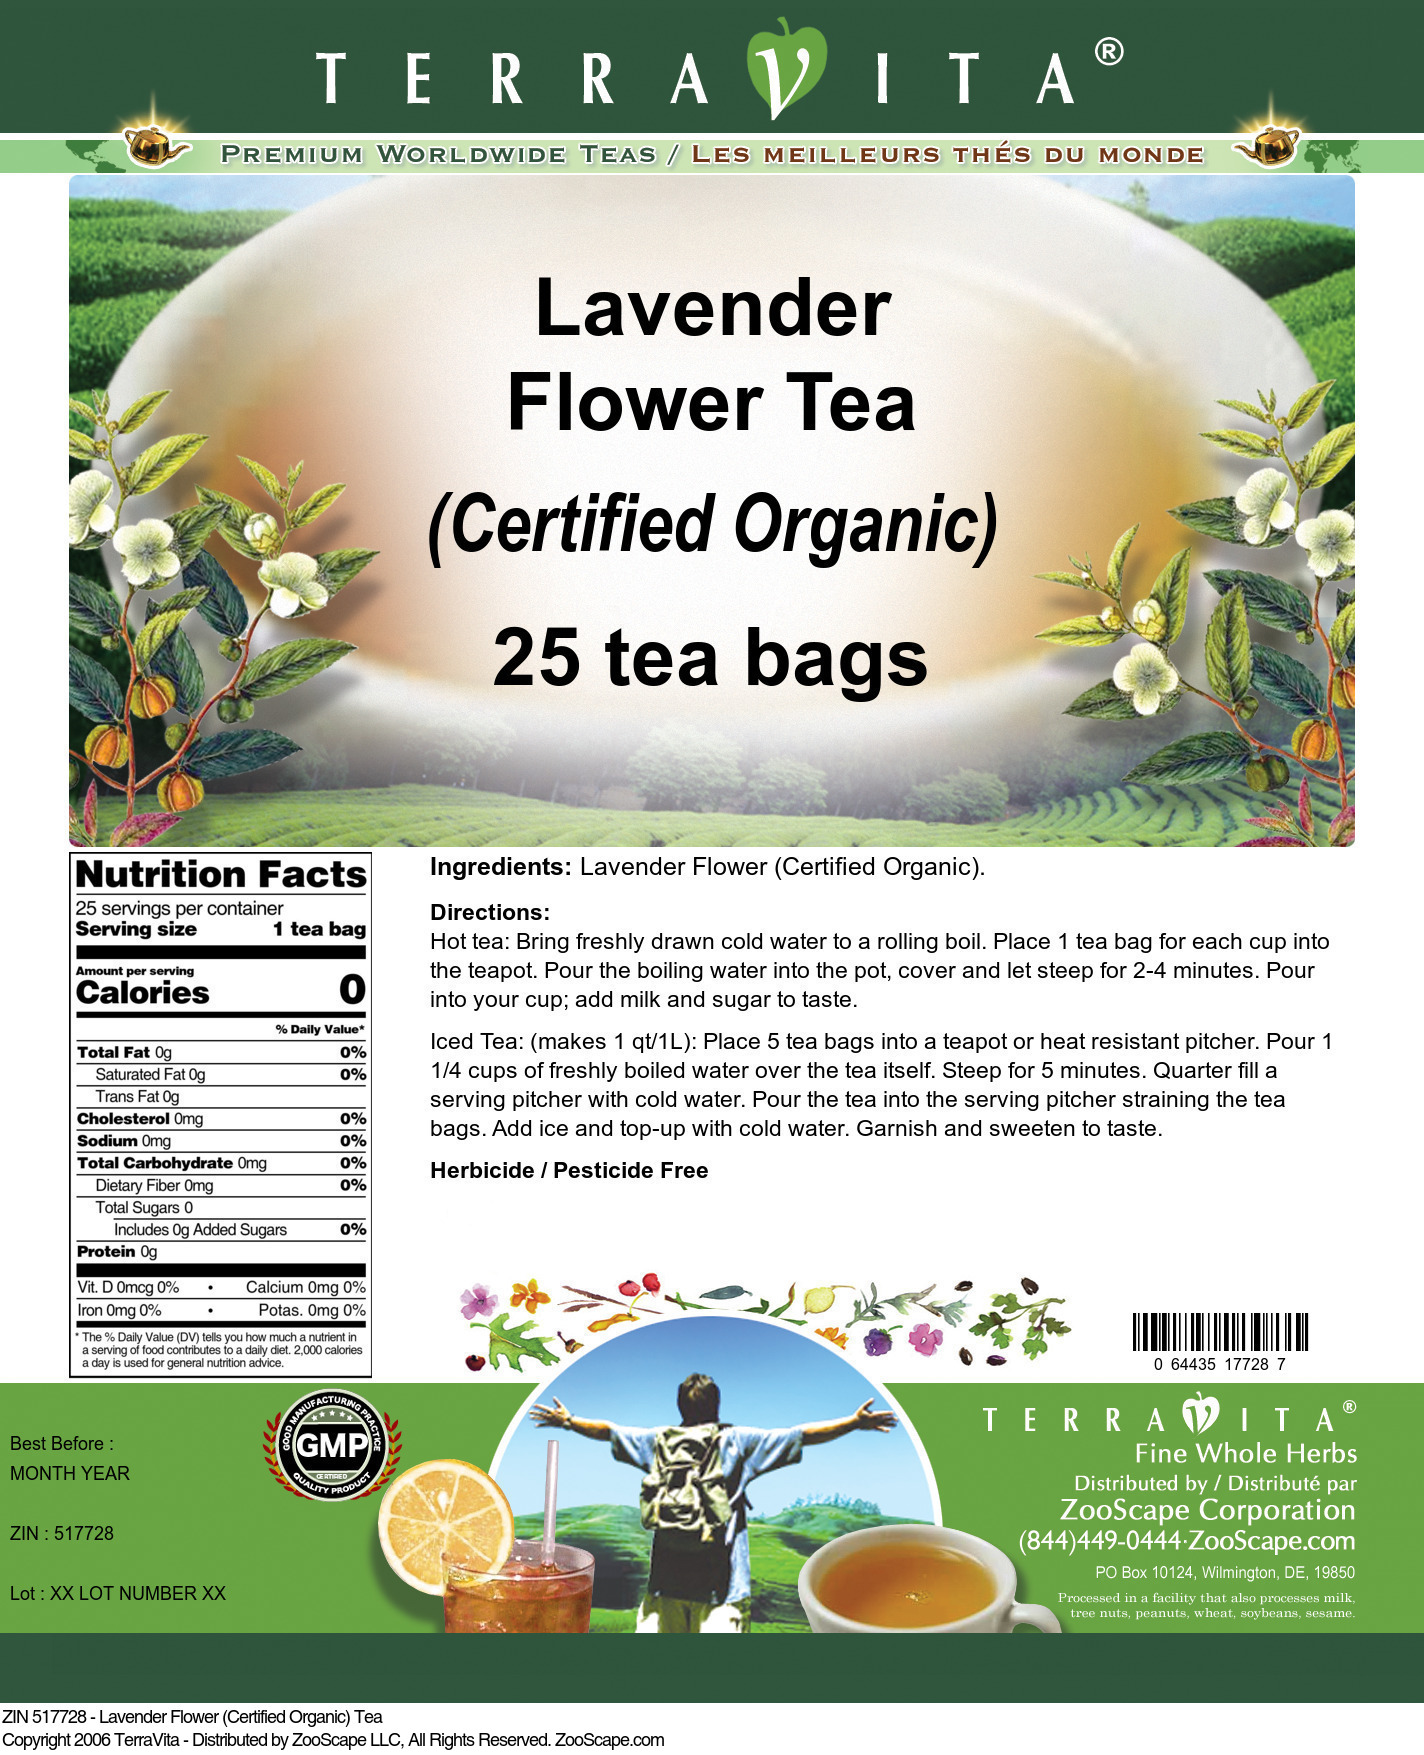 Lavender Flower (Certified Organic) Tea - Label